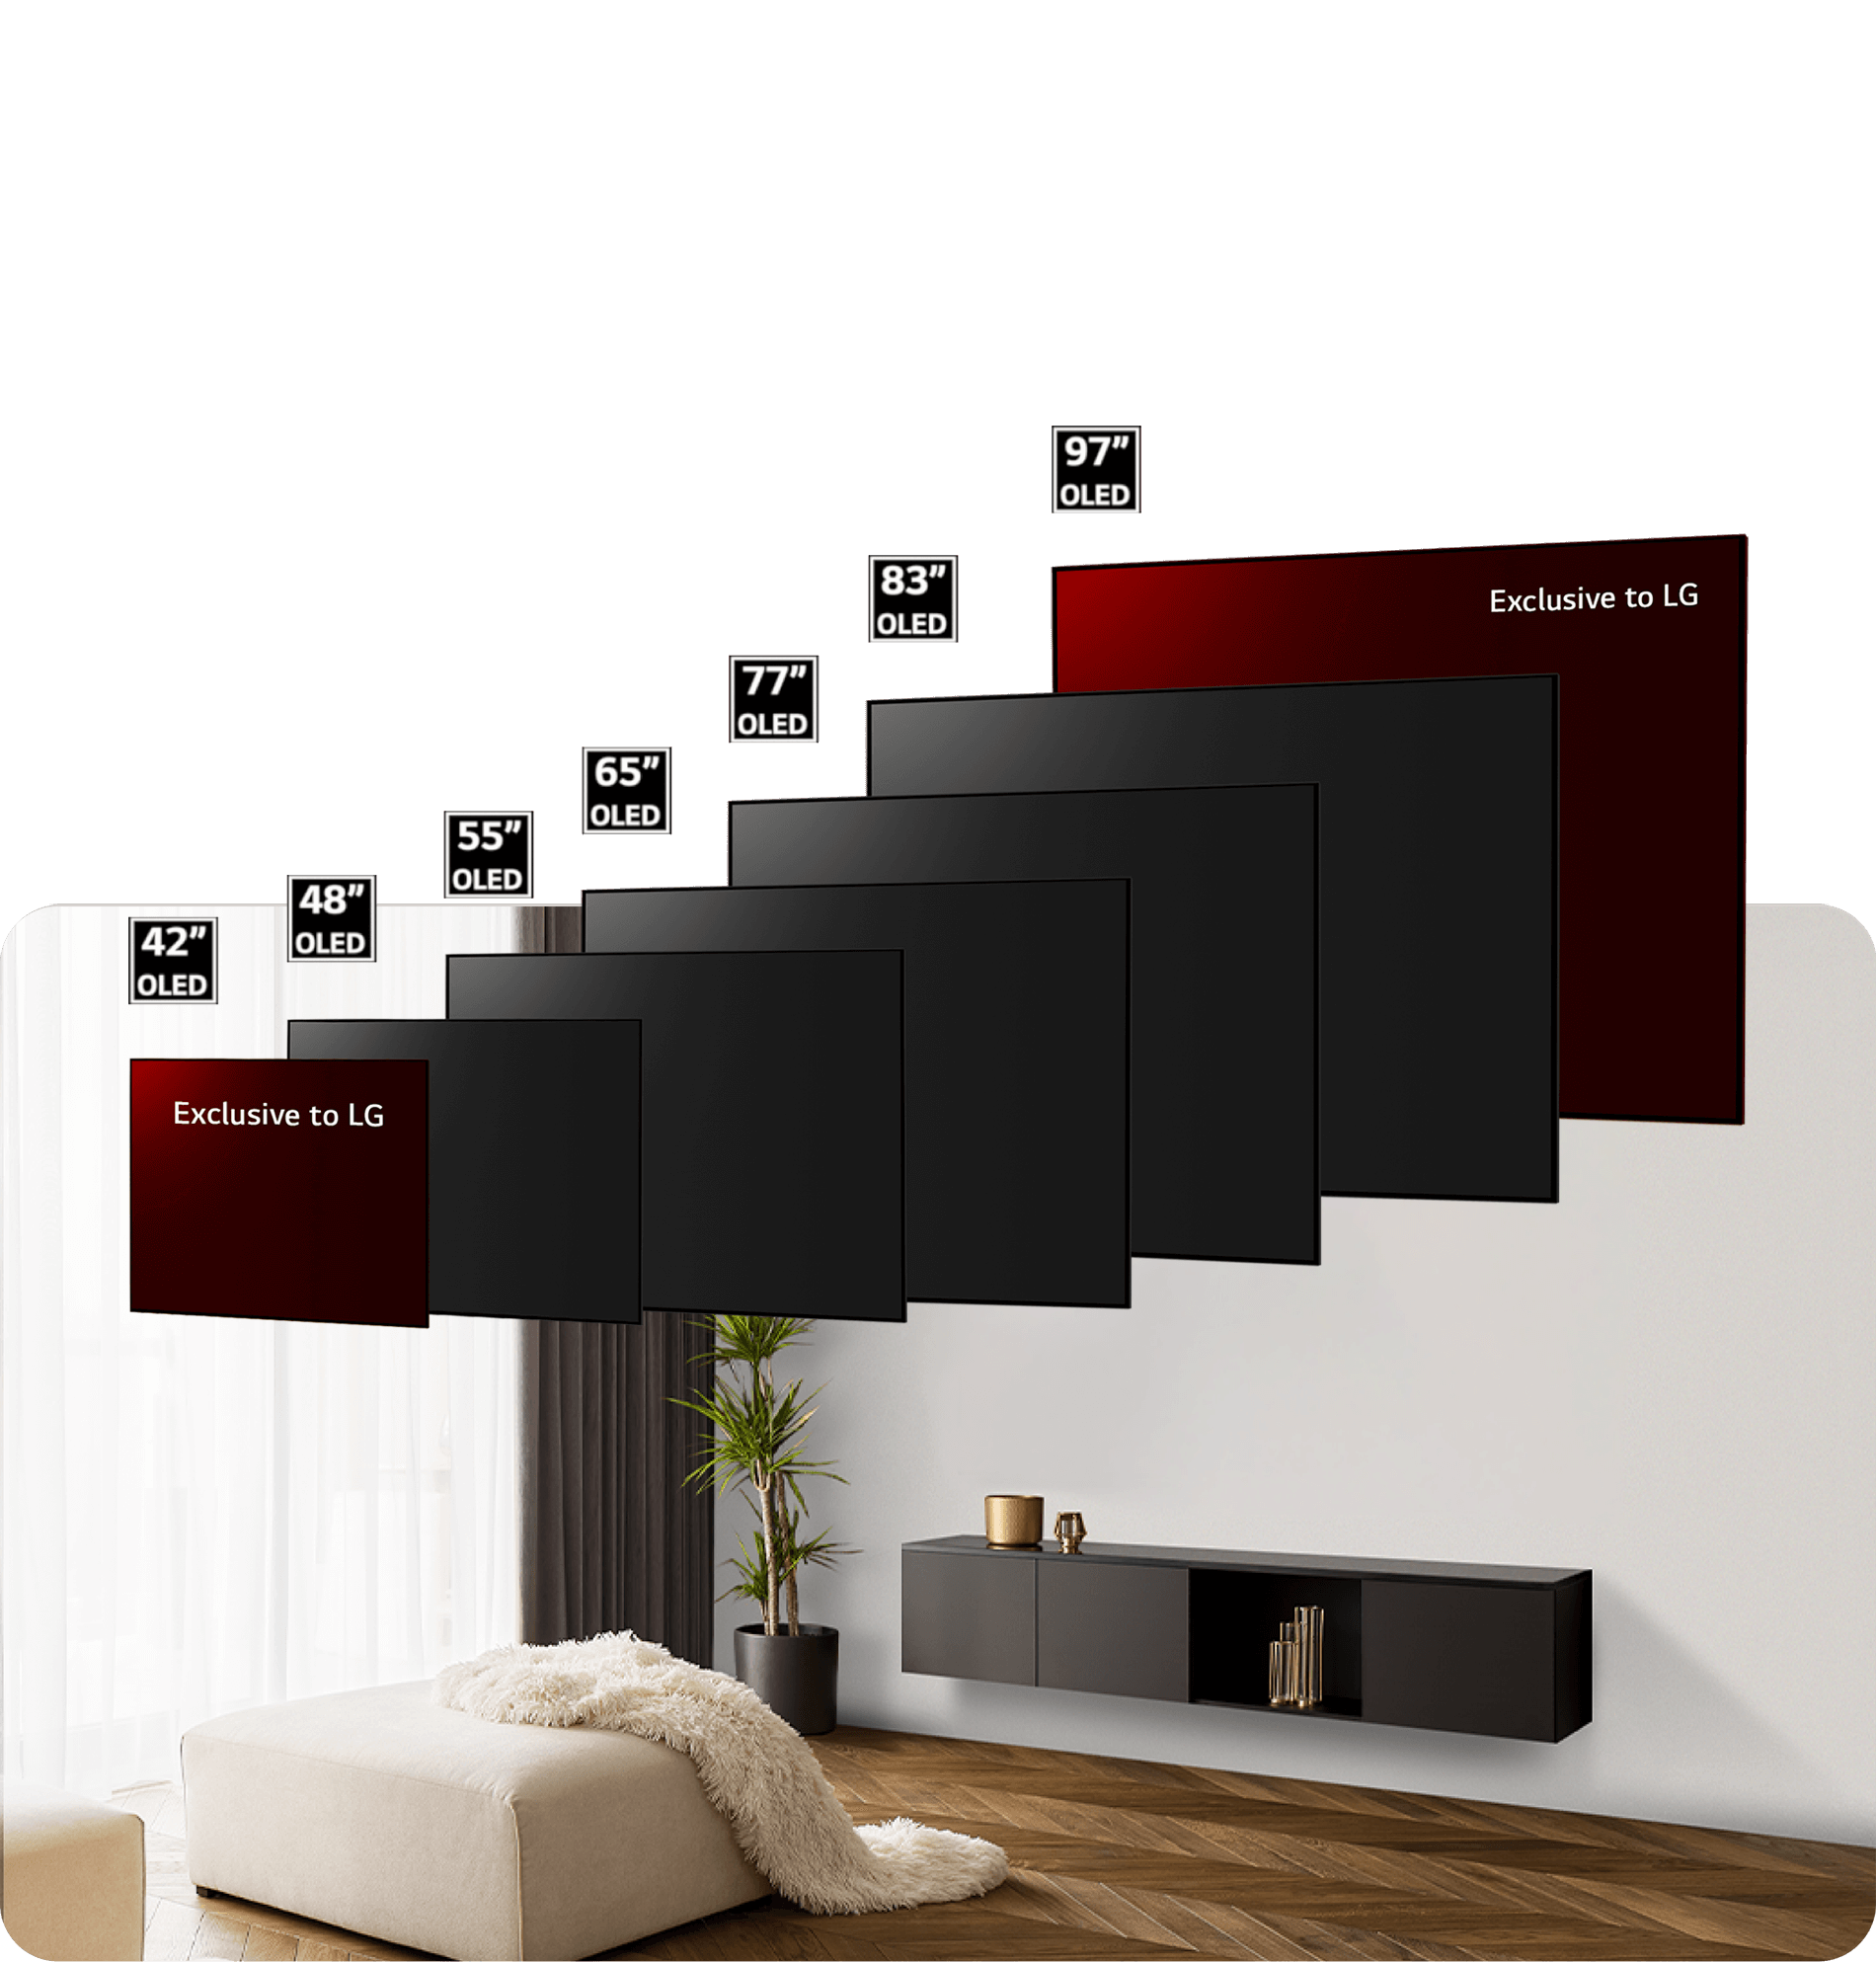 The full range of OLED premium TV screen sizes in sequential order for desktop.